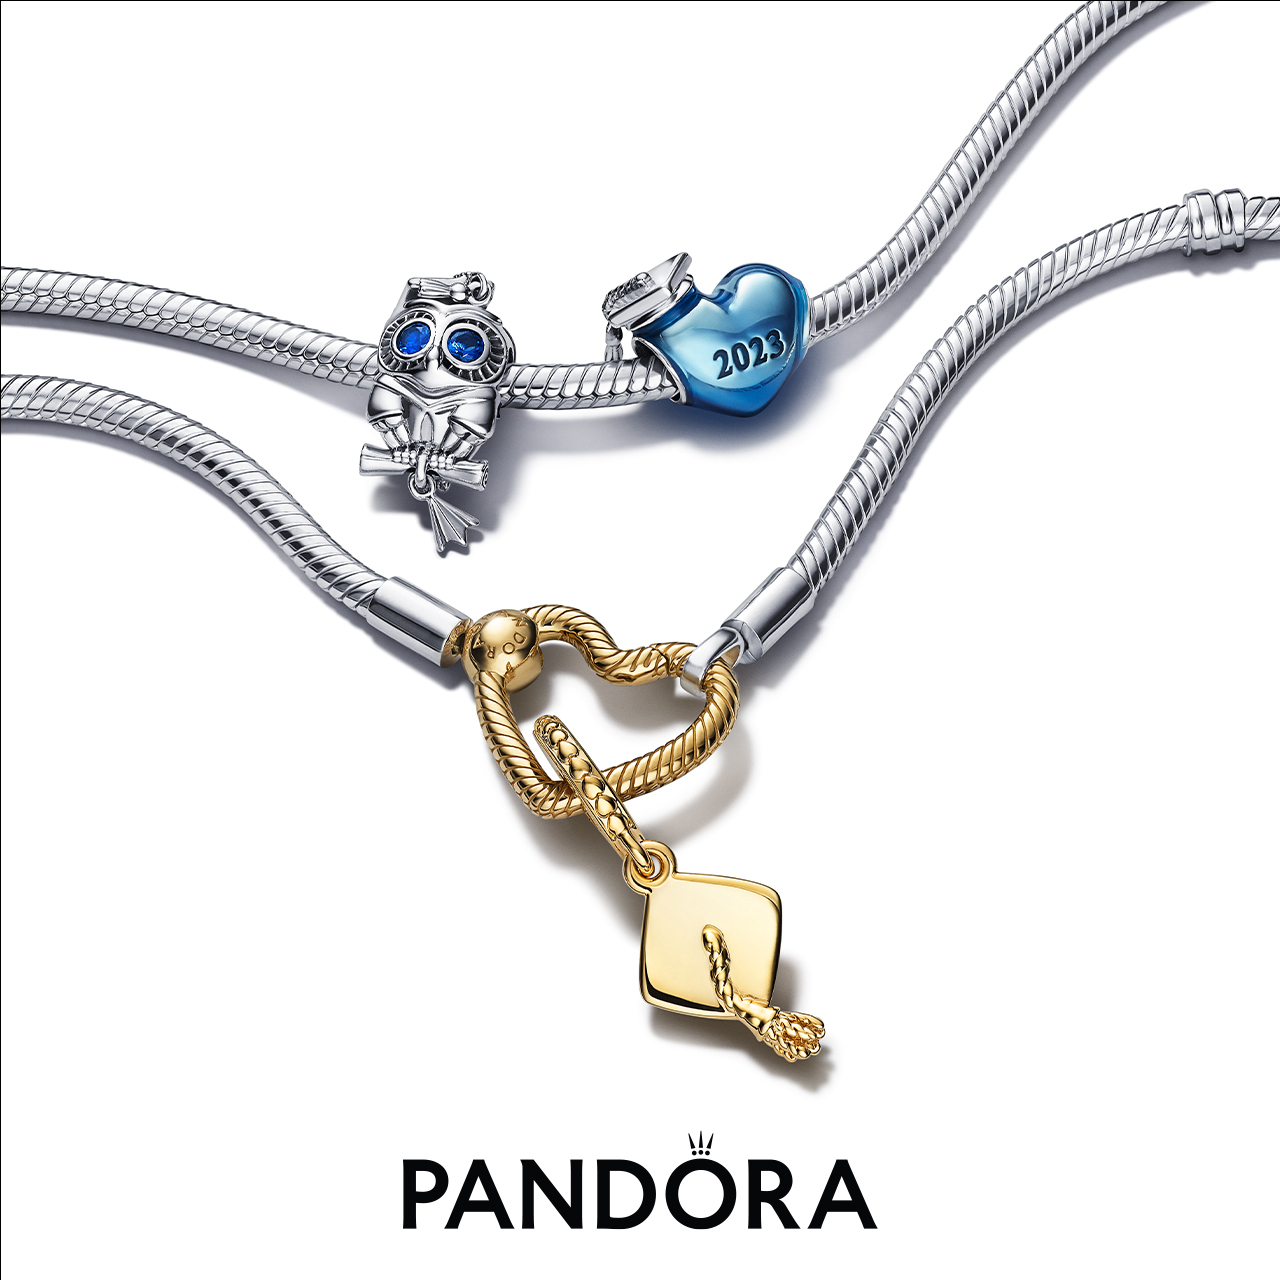 Pandora - Campaign #94 - Celebrate Graduation with Pandora - EN - 1280x1280